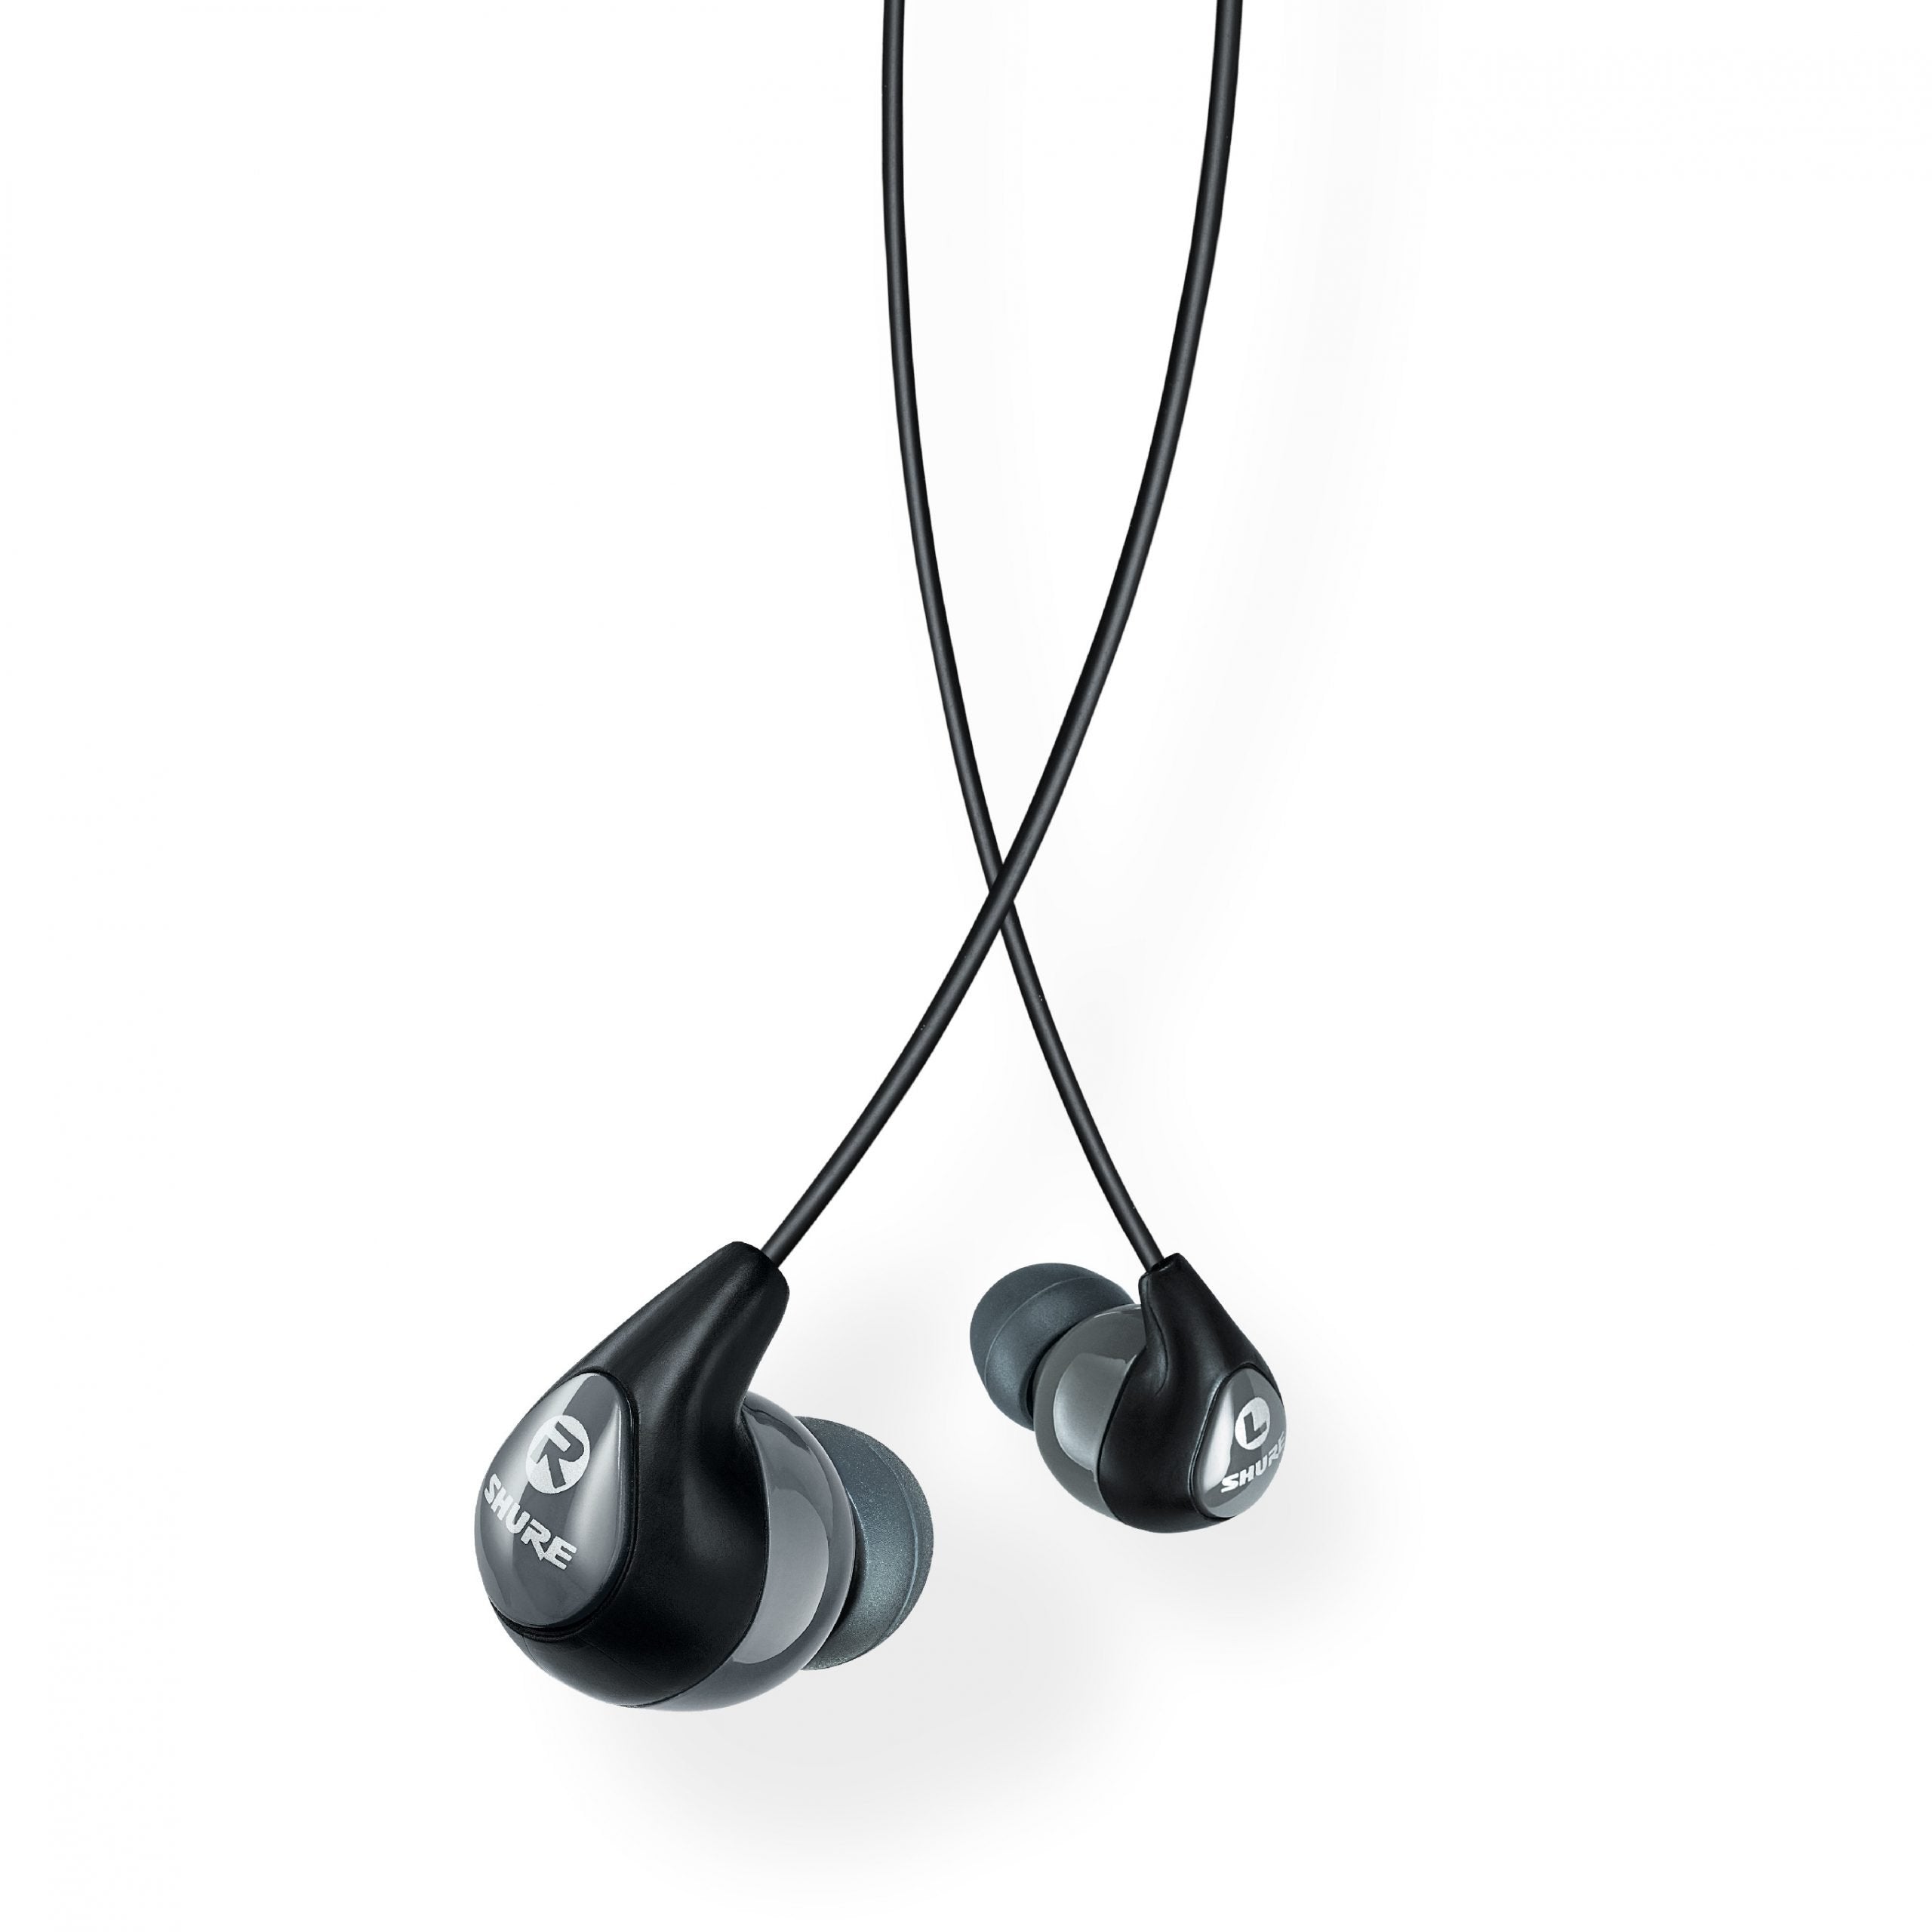 Shure SE112-GR-EFS - Sound-isolating Earphones / In-ear monitors